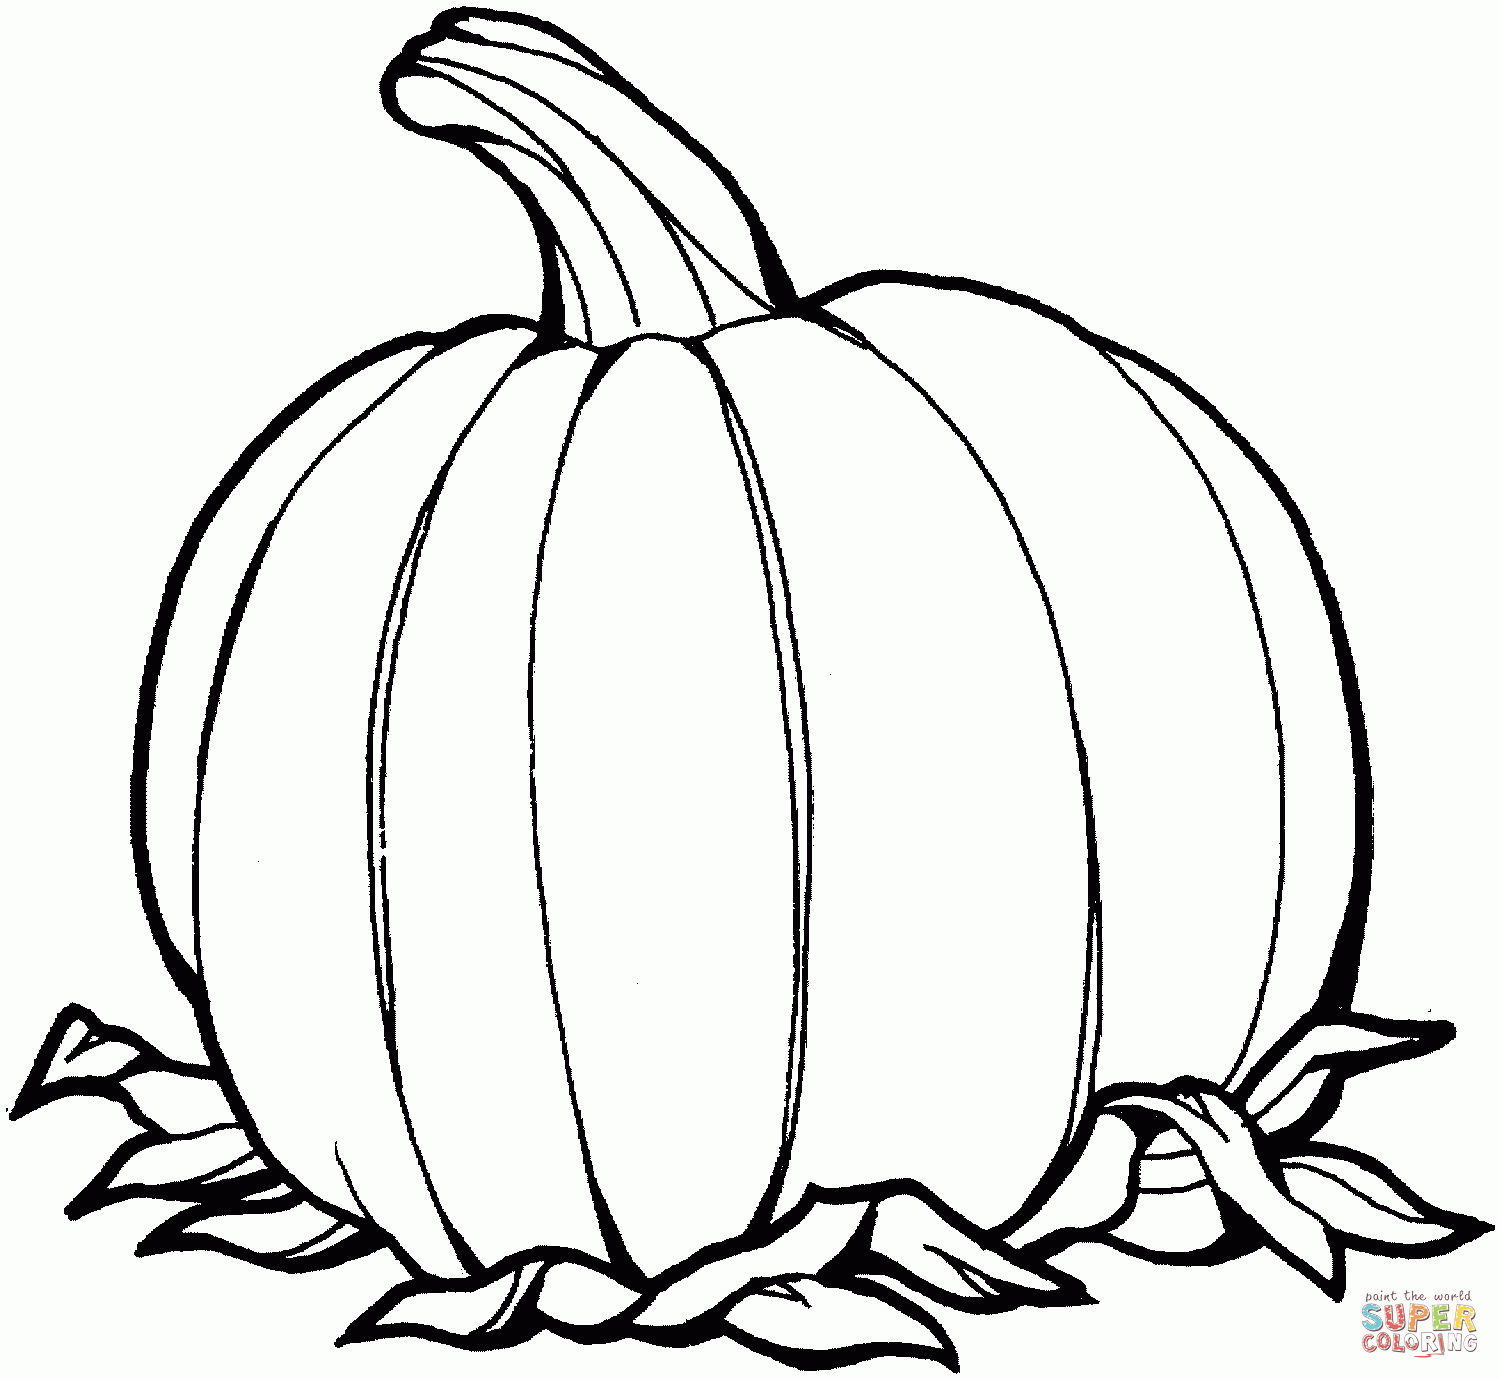 Pumpkin Coloring Page | Free Printable Coloring Pages - Free Printable Pumpkin Coloring Pages